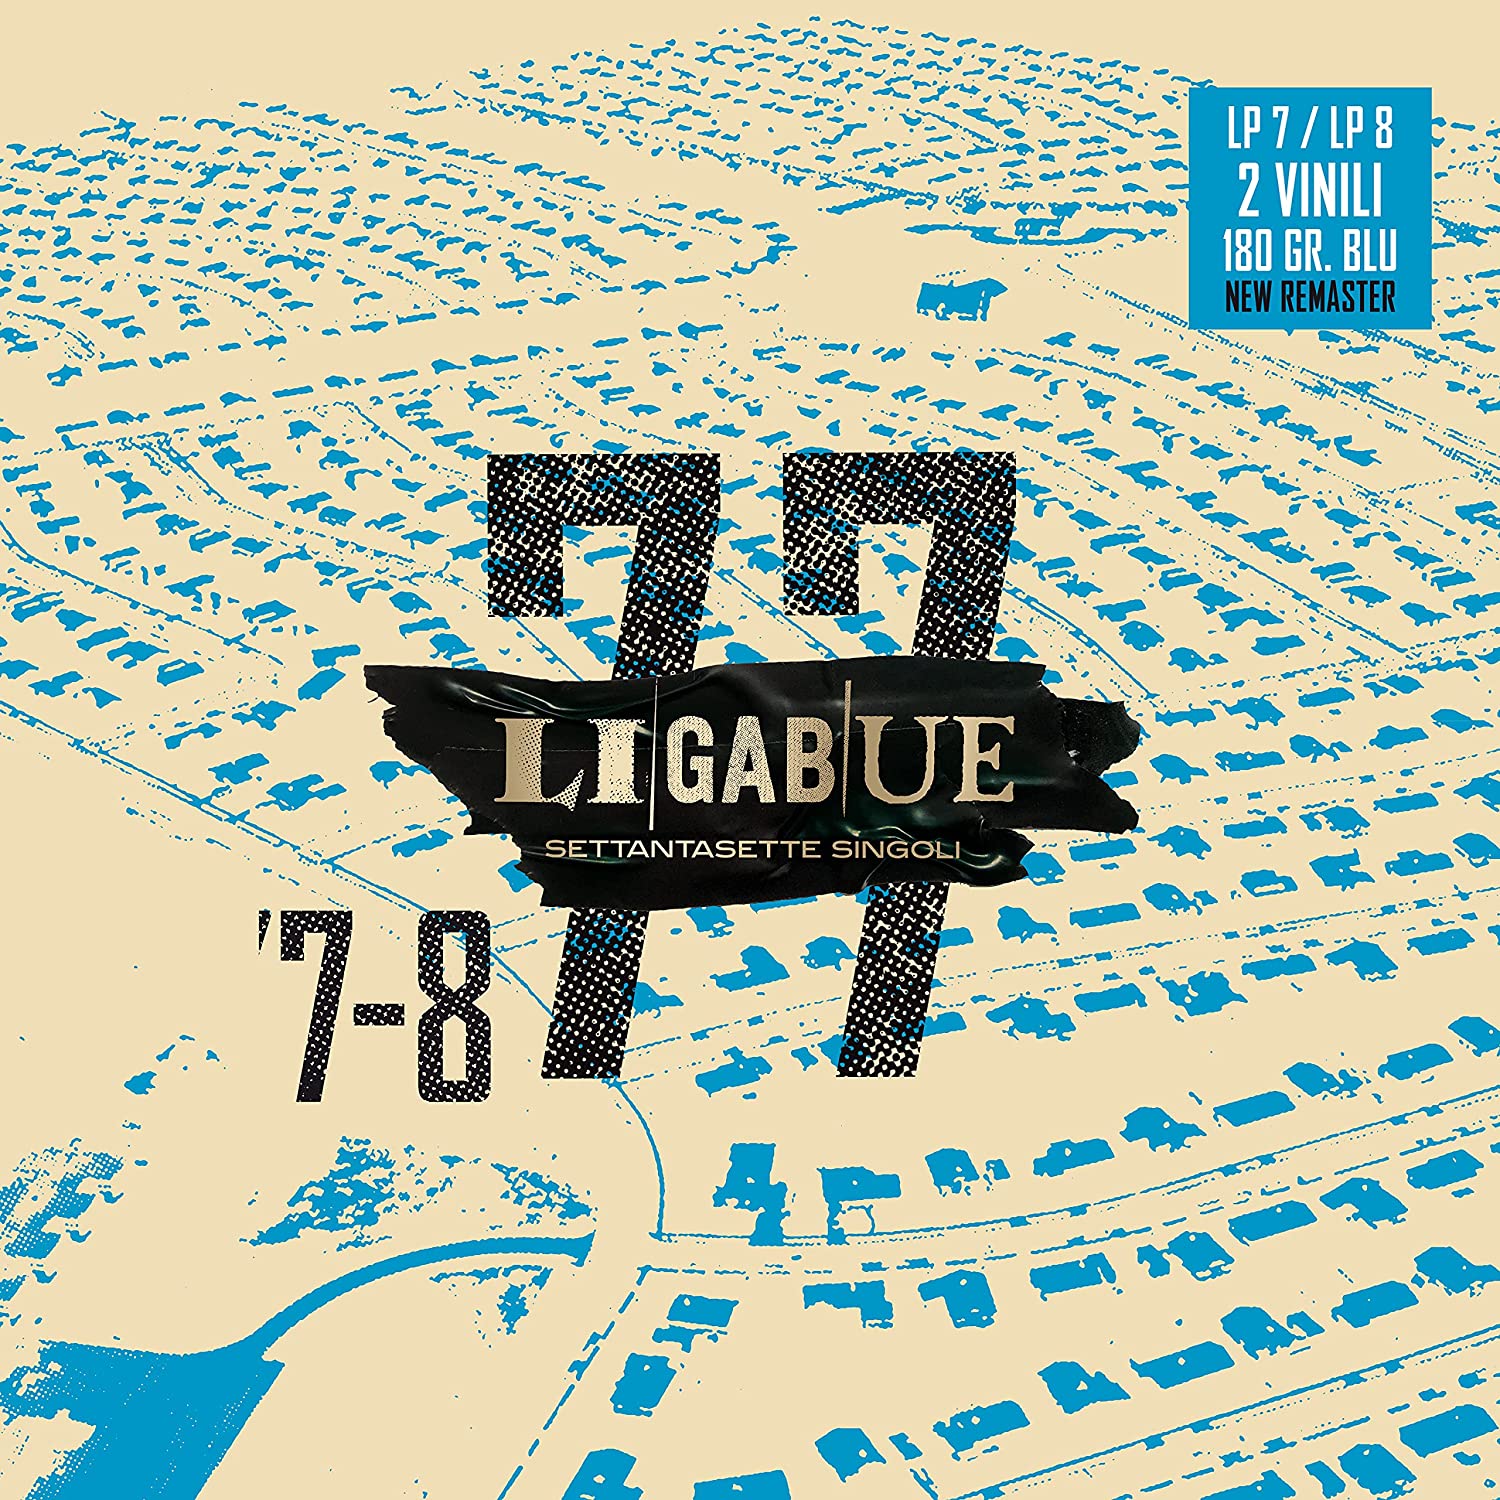 Ligabue - 77 singoli lp 7 + lp 8